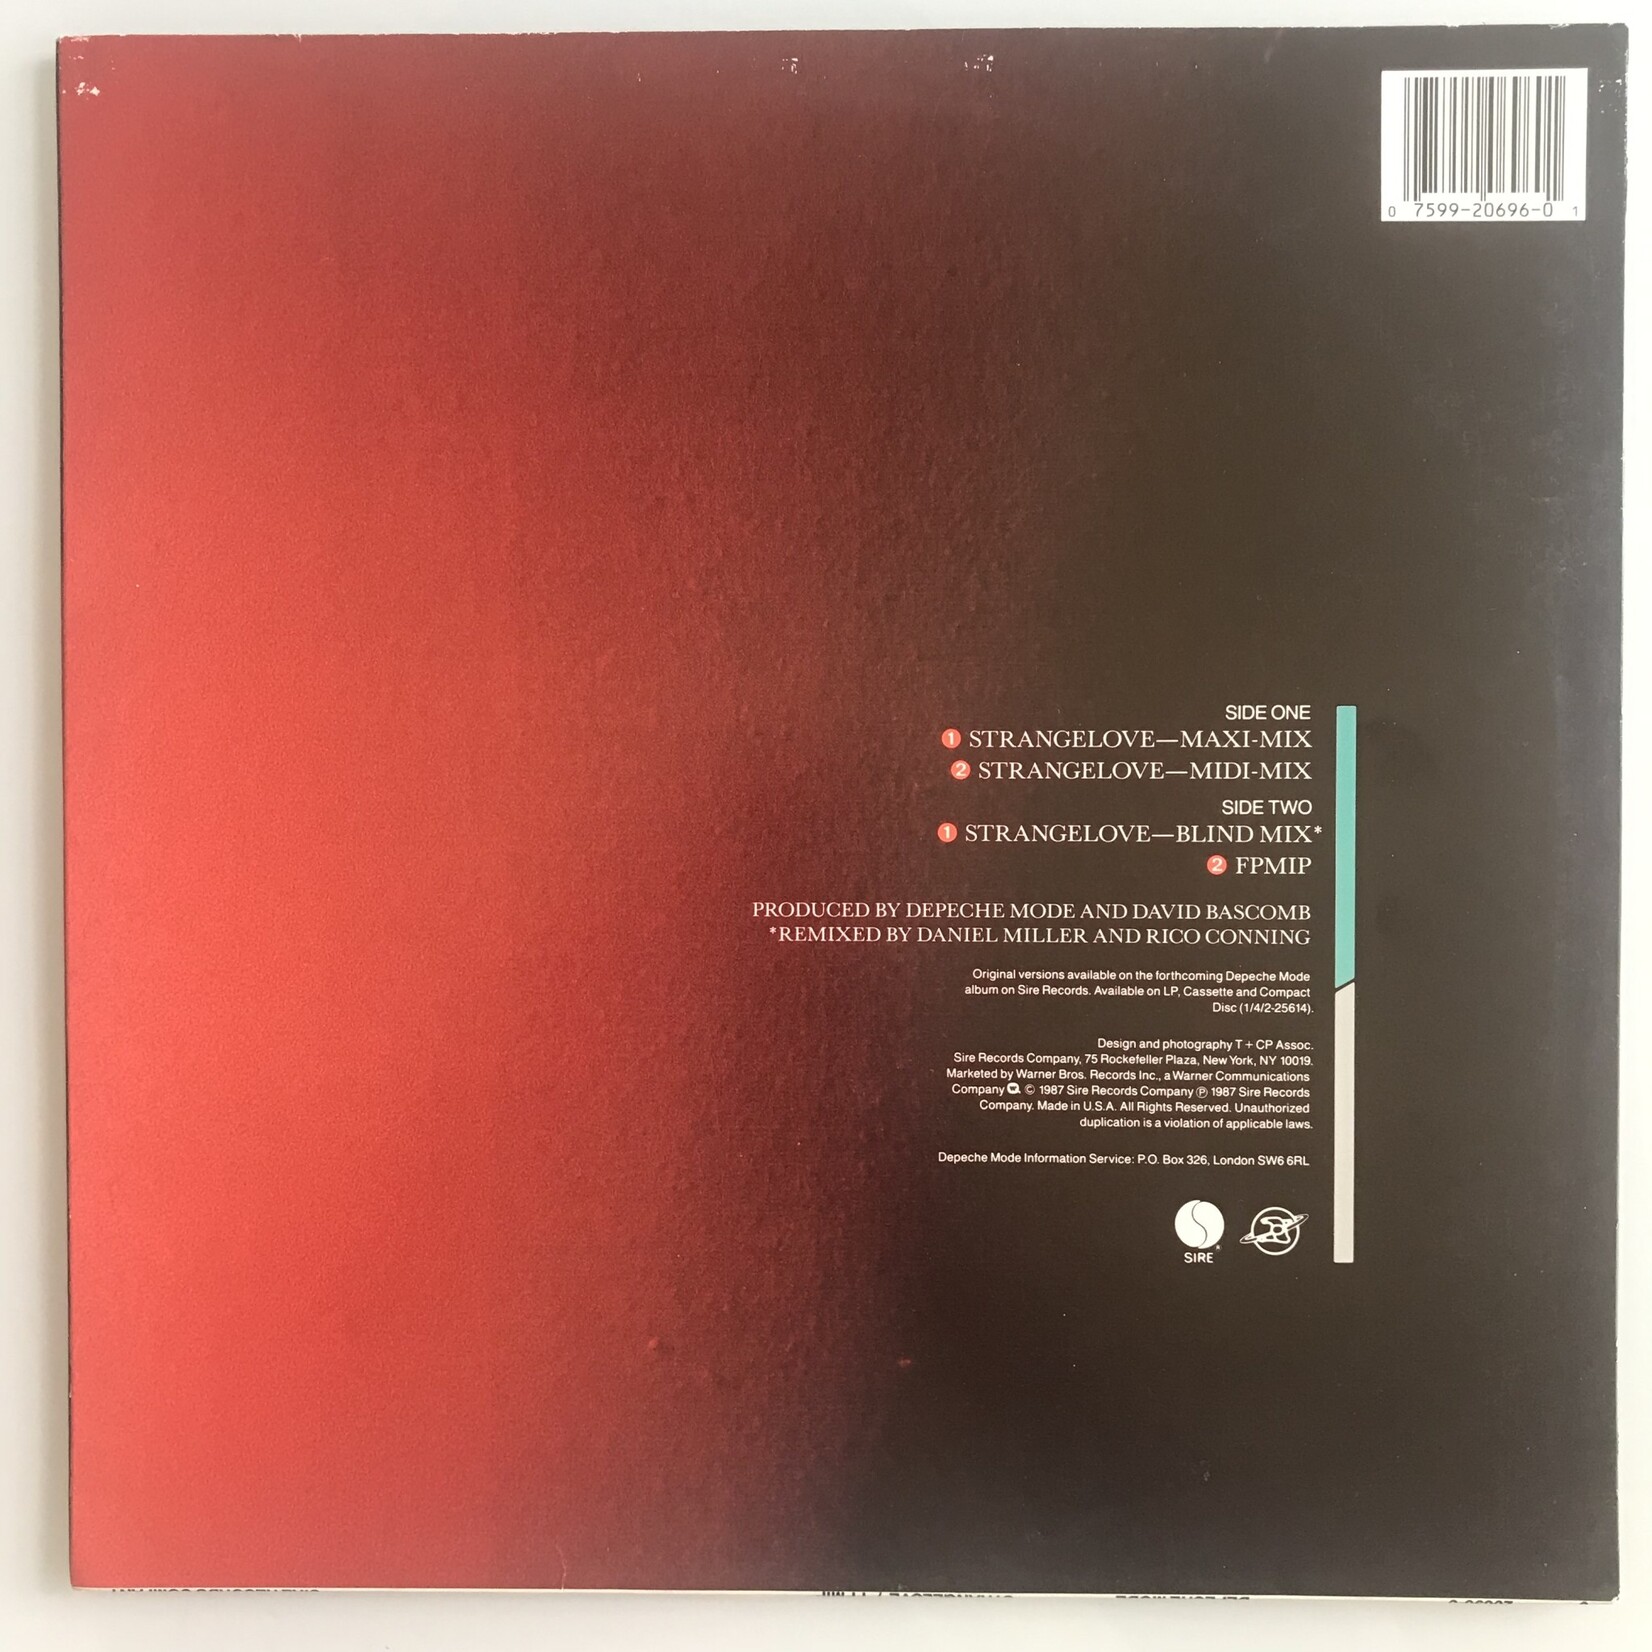 Depeche Mode - Strangelove / FPMIP - Vinyl 12-Inch Single (USED)